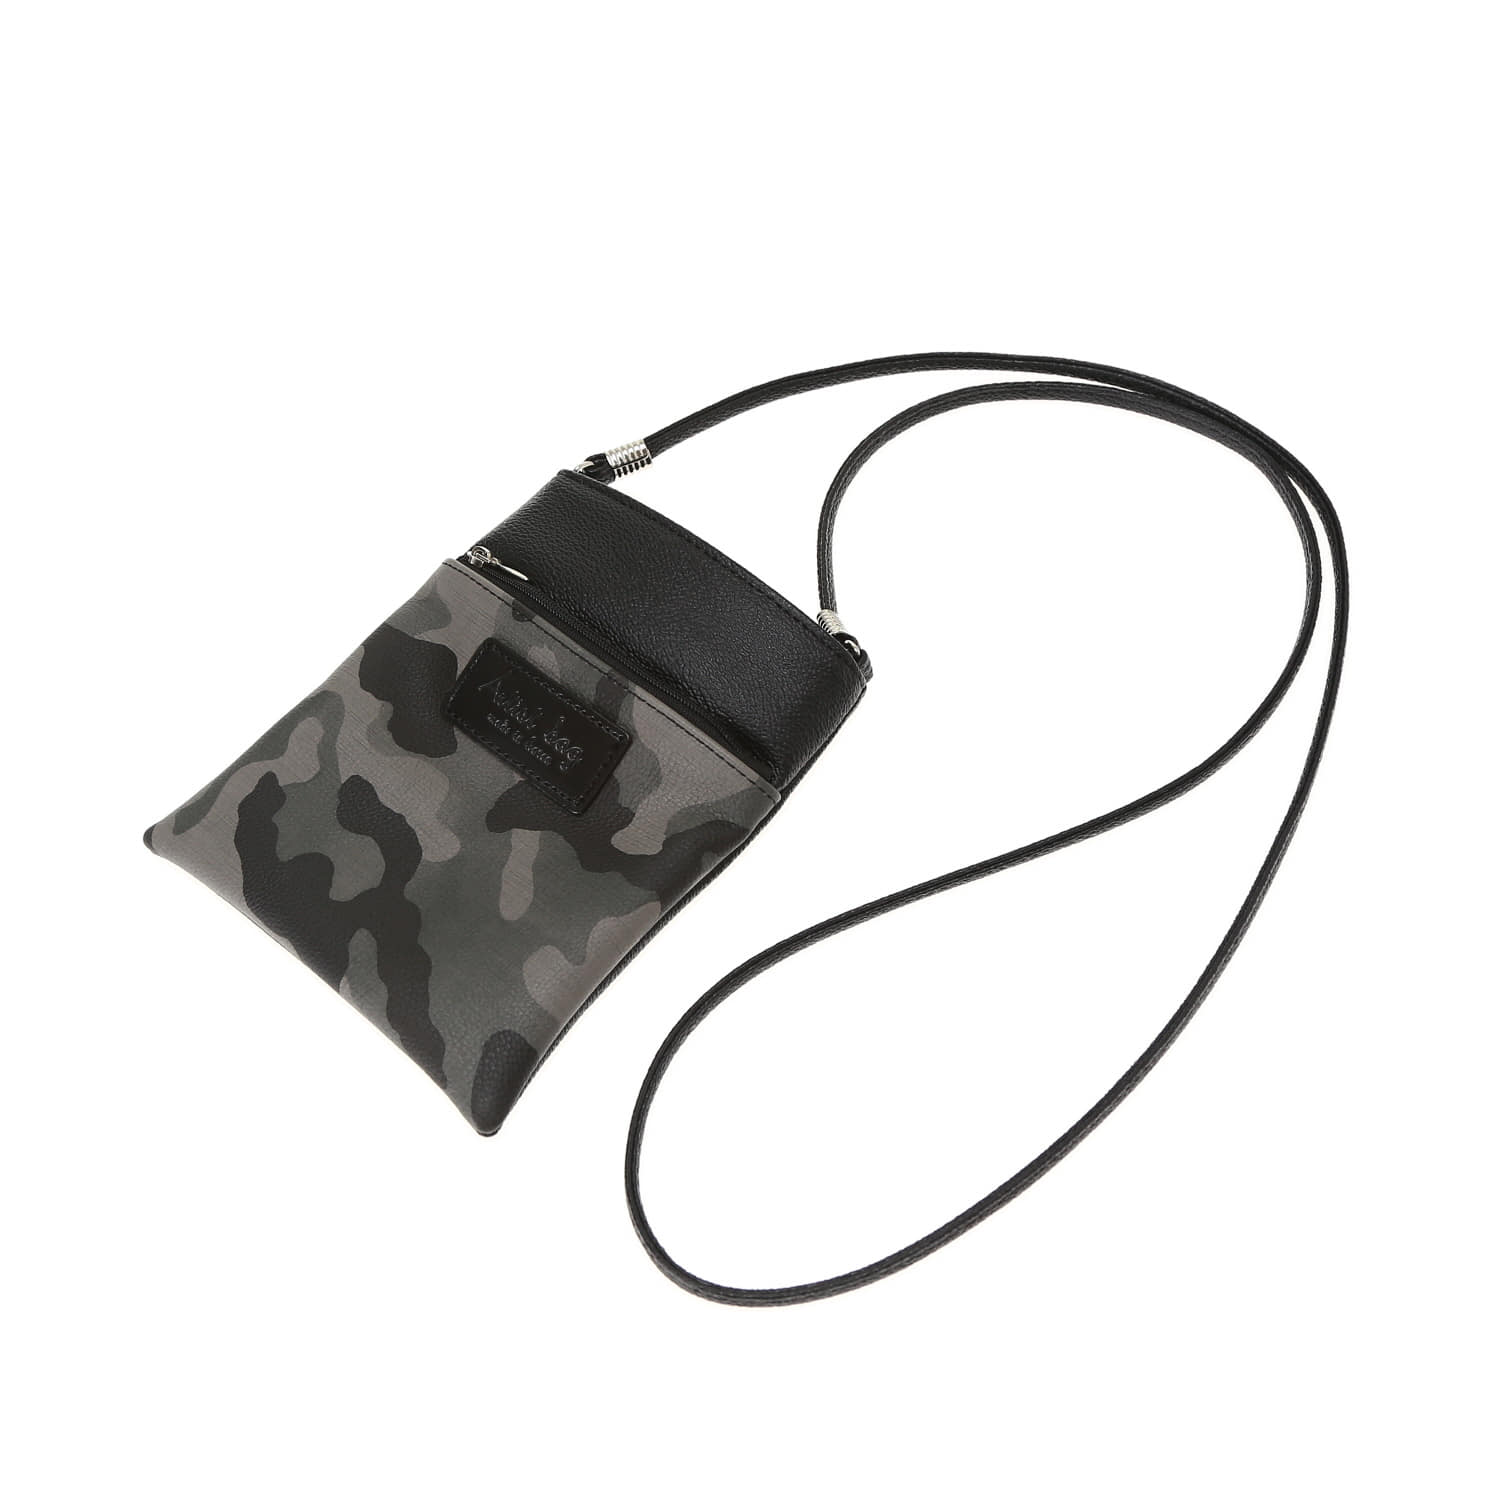 Artistbag cama smart mini bag